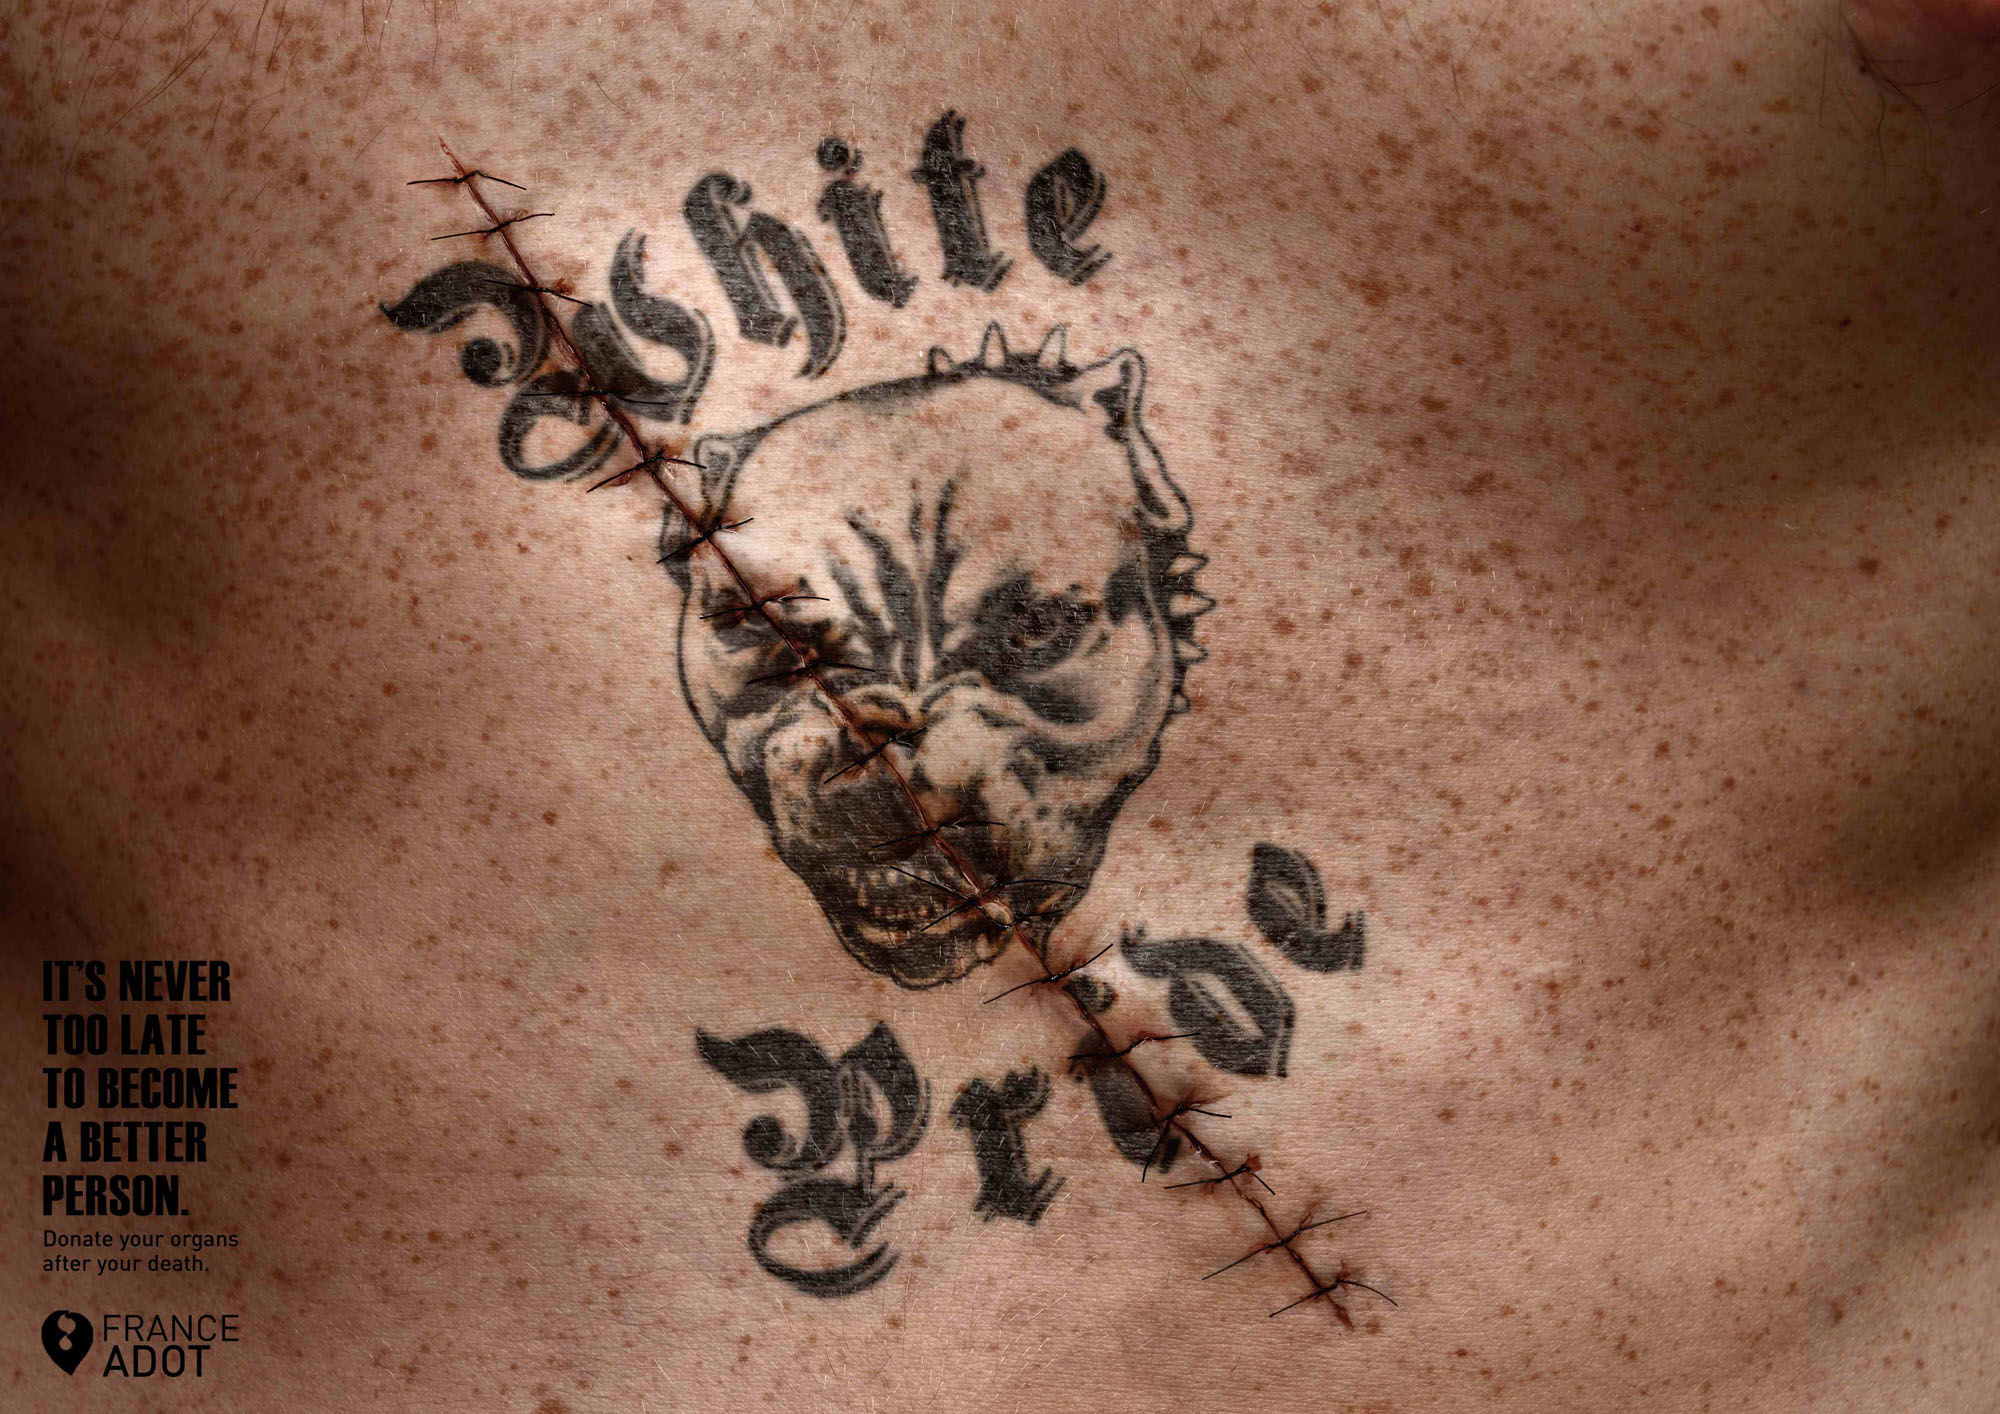 France Adot Tattoo White